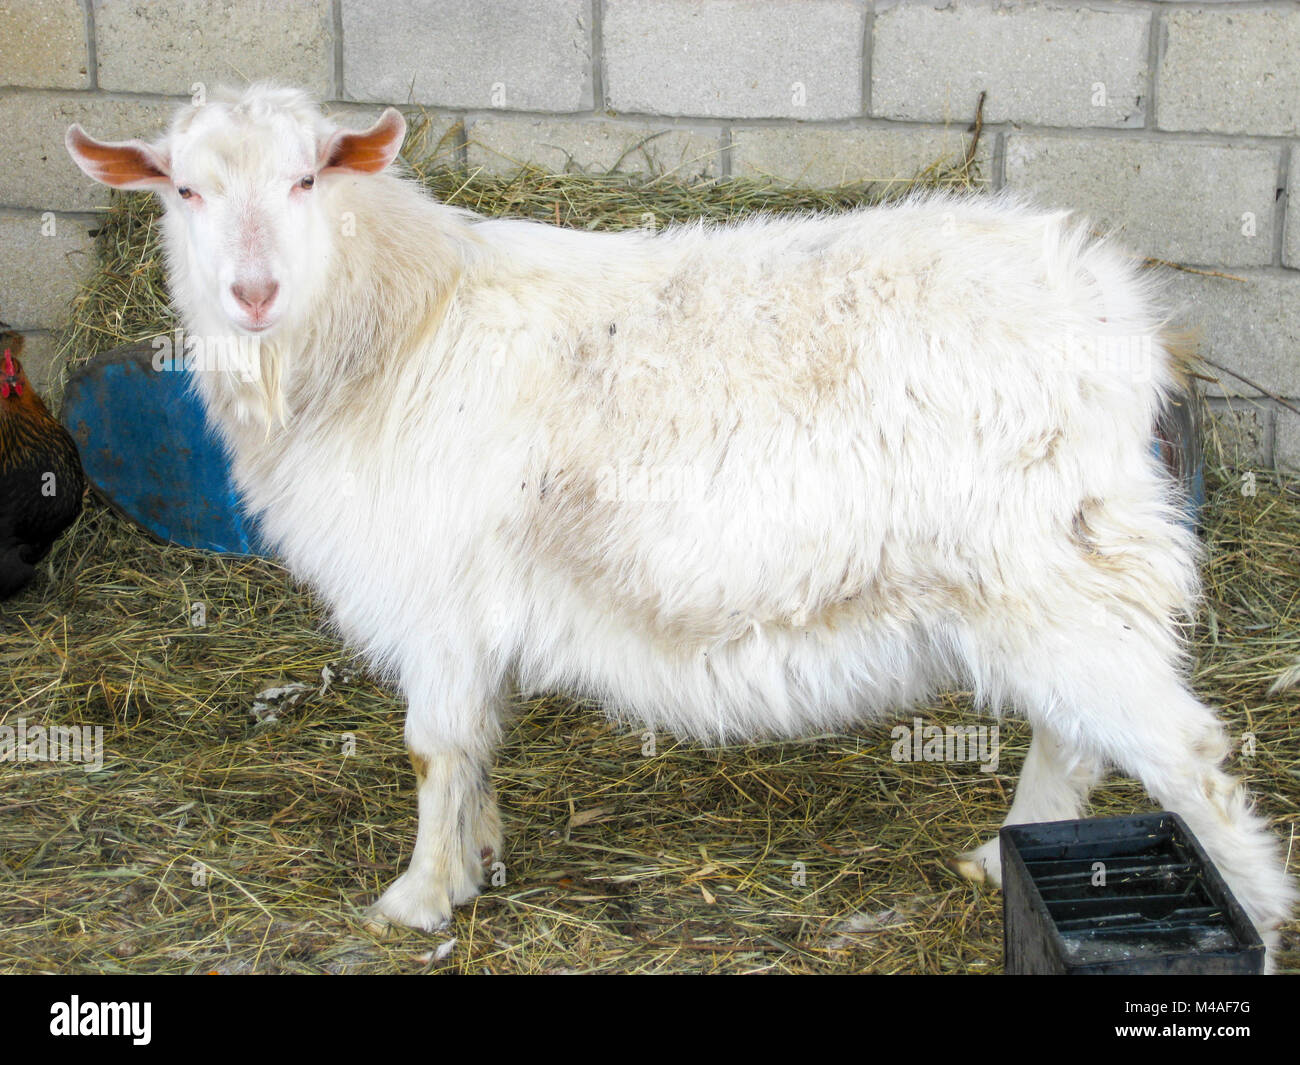 Goats in the household. Mini goat farm Stock Photo